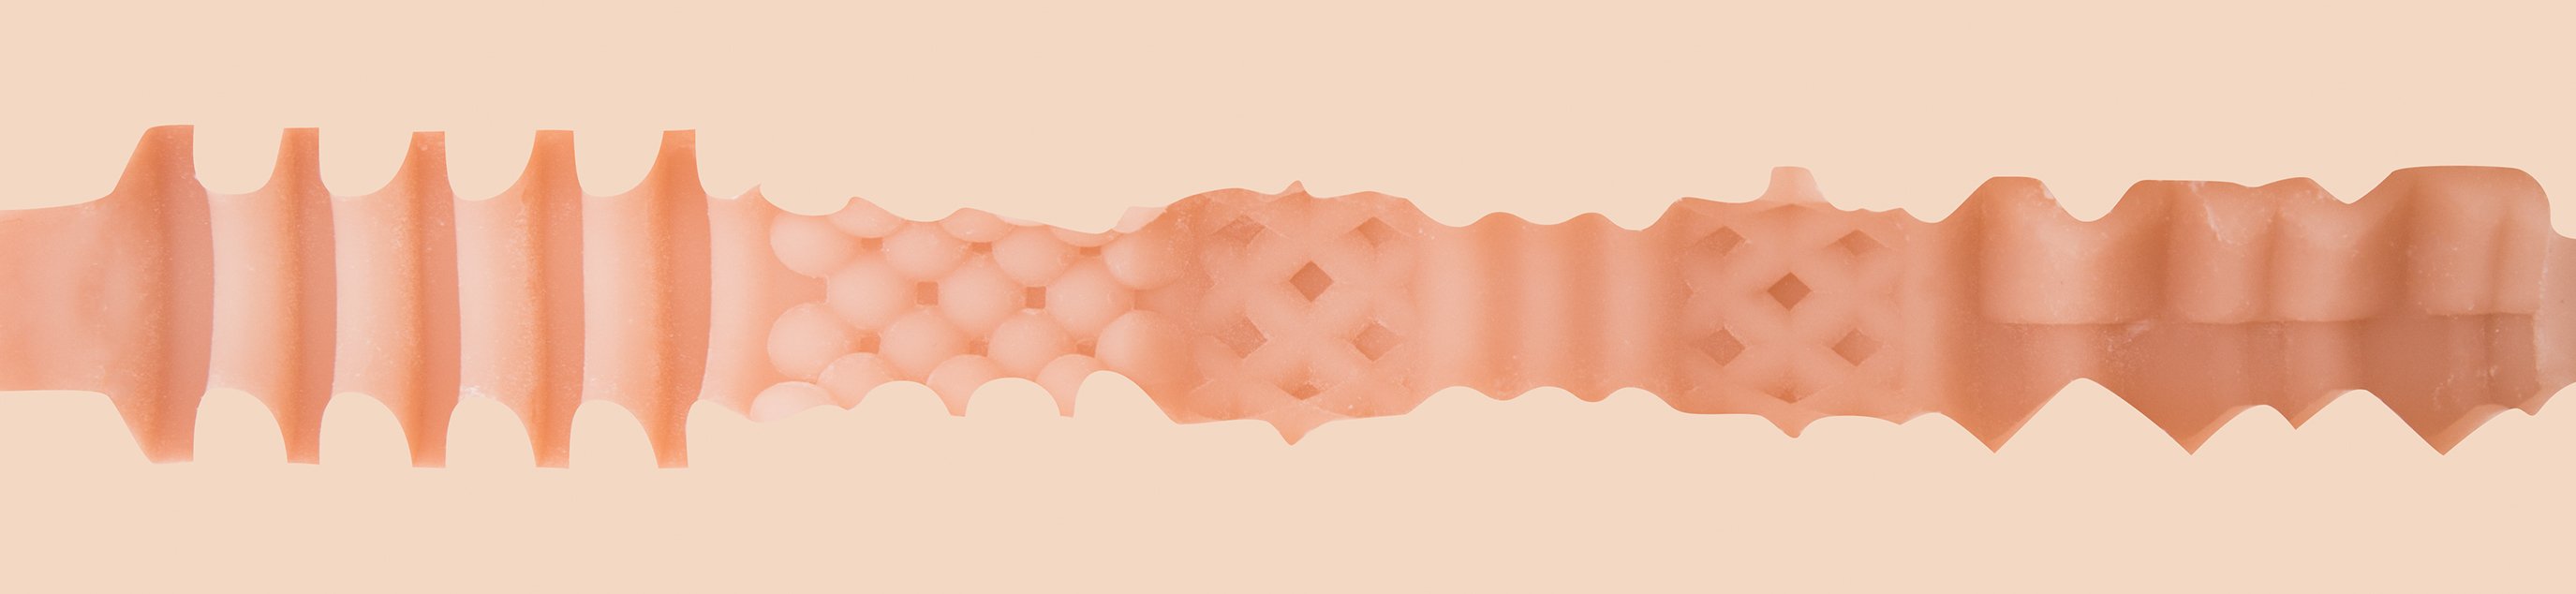 Flex Fleshlight Girls Texture Image